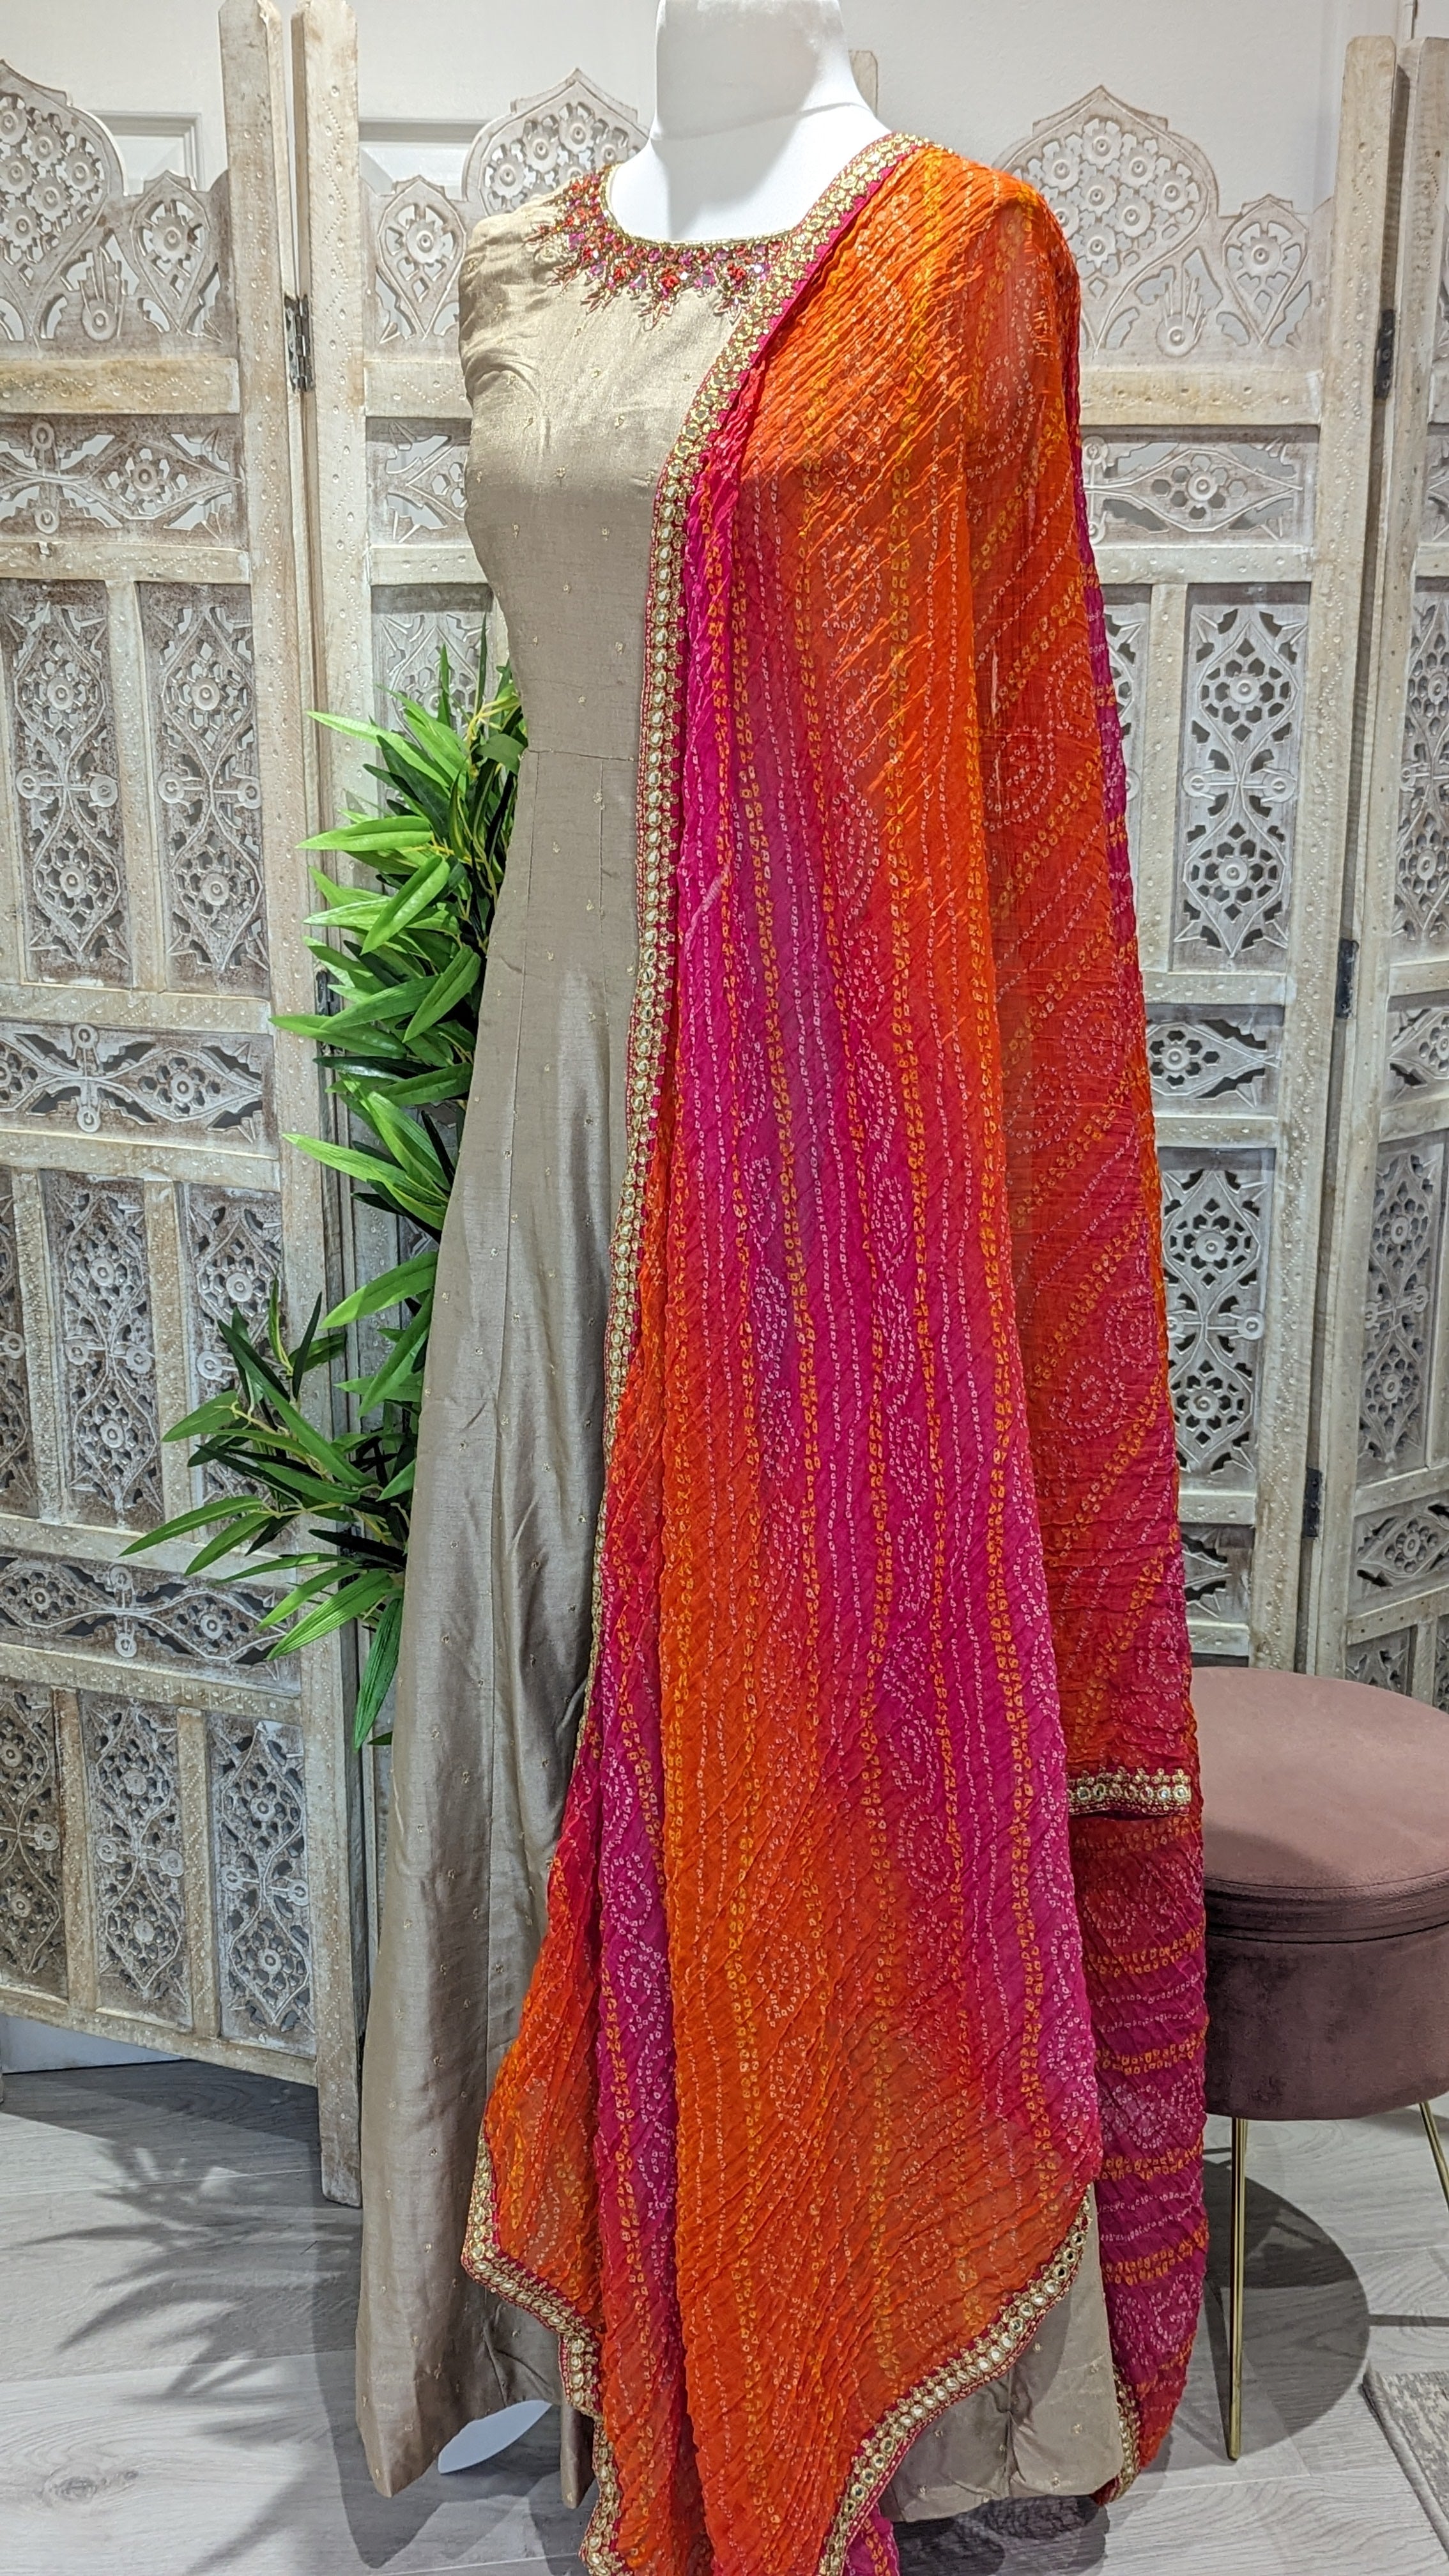 Gown with Pink\Orange Bandhani Dupatta. Size 8-10 (bust 38")